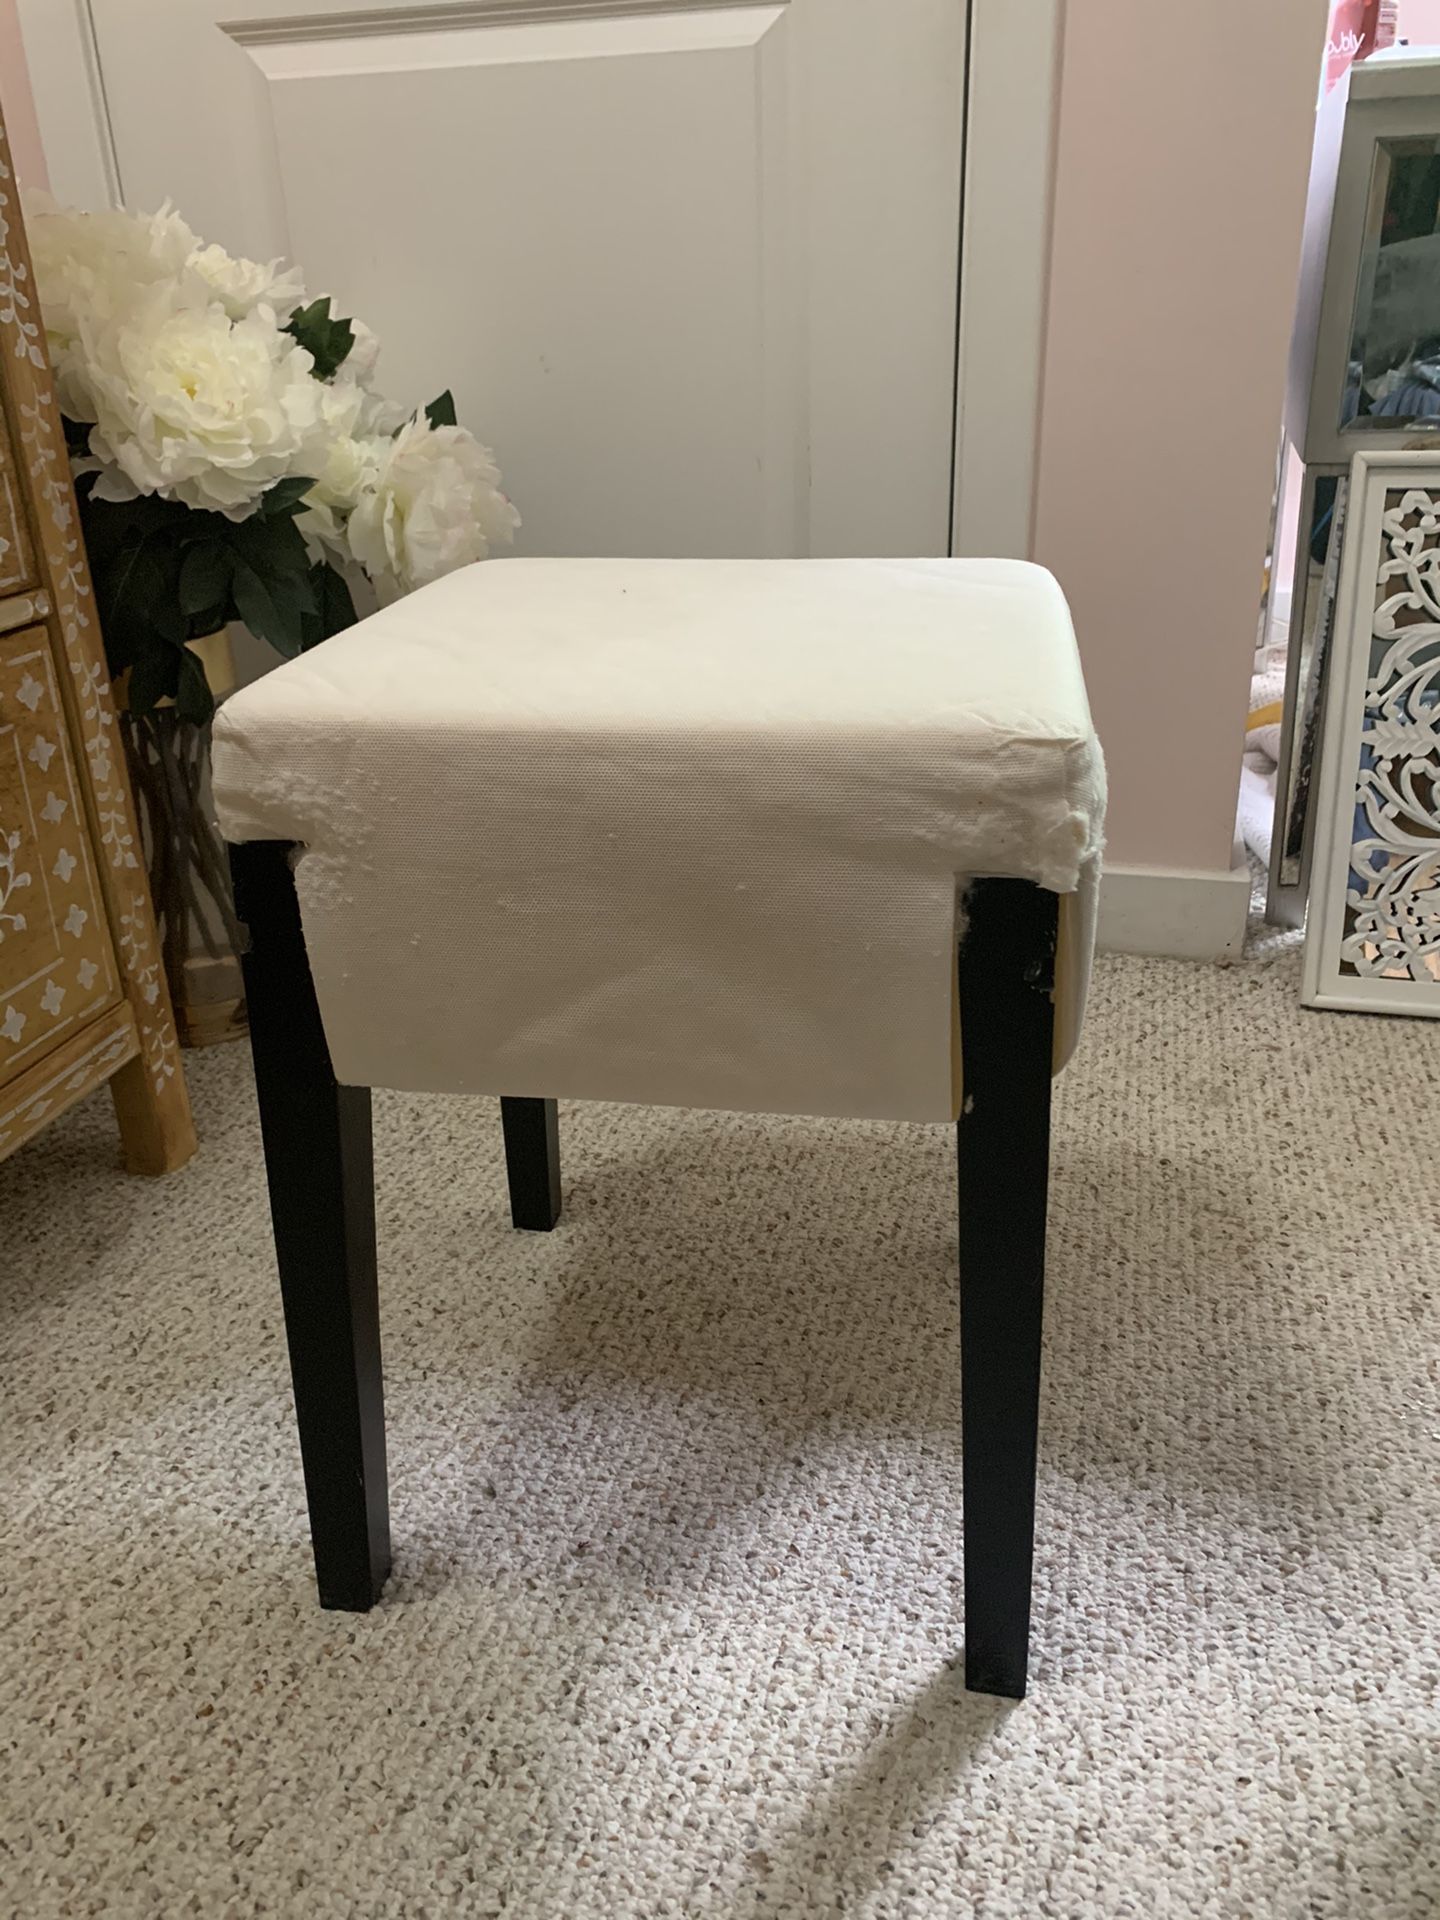 IKEA NILS stool